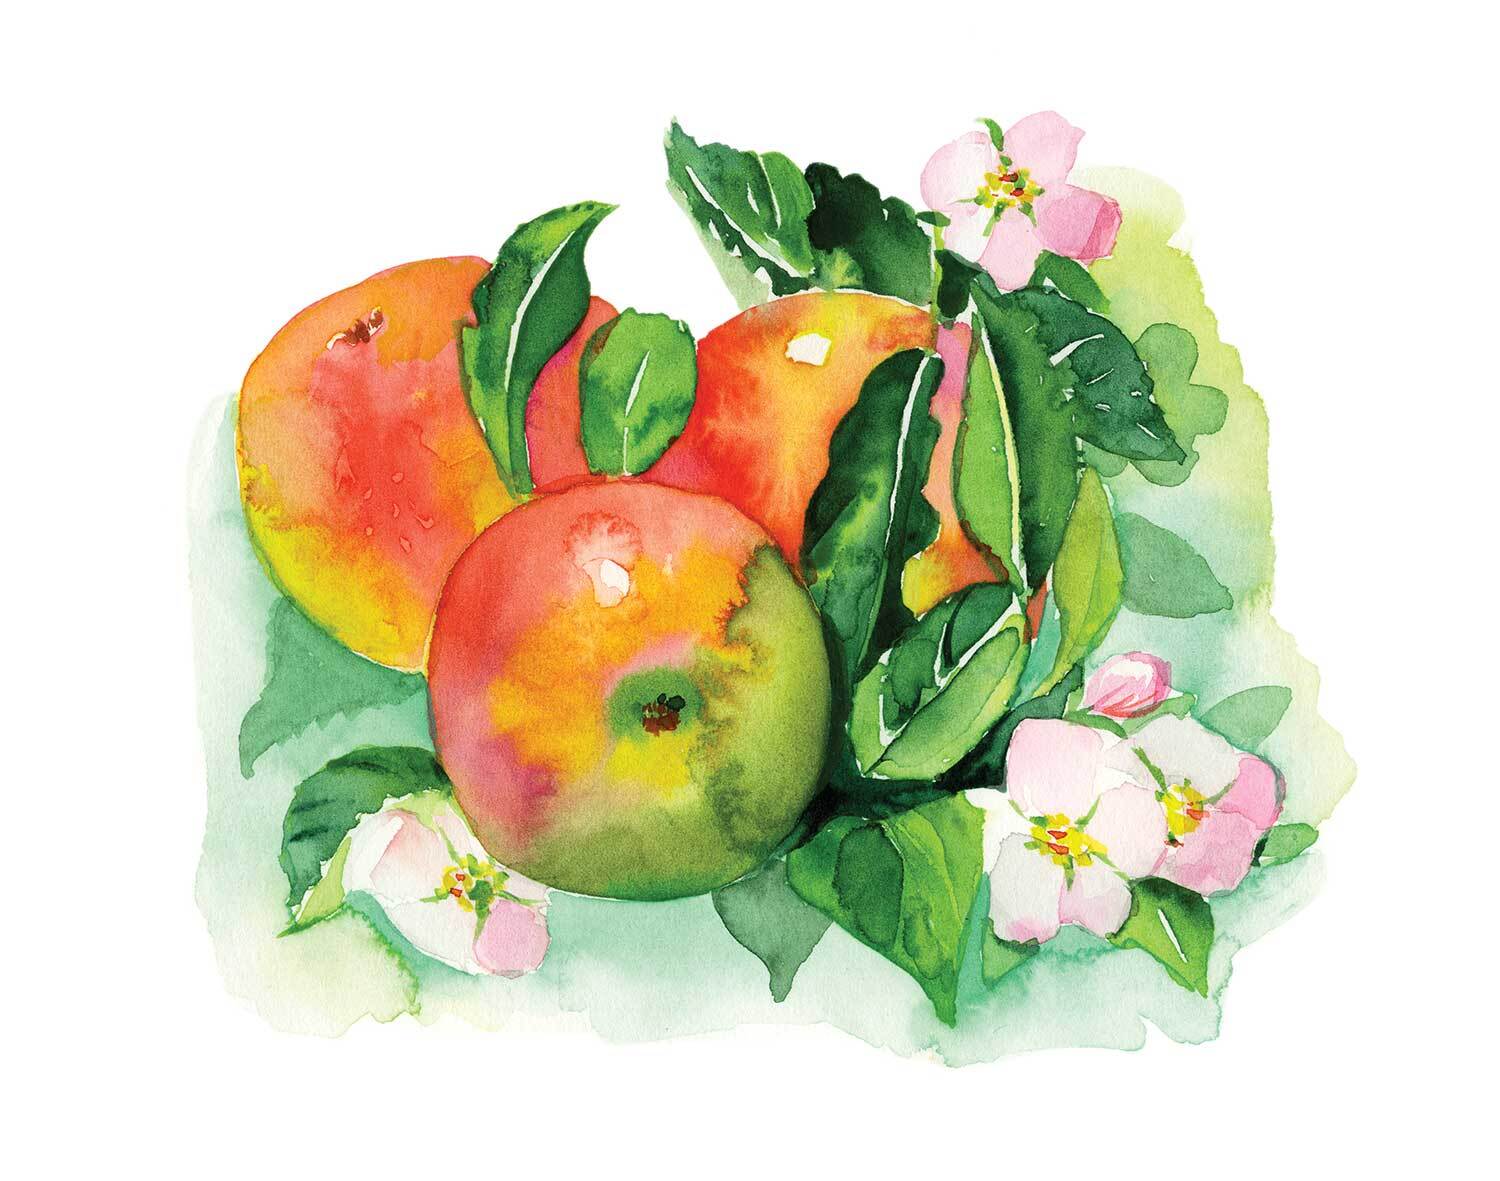 An illustration of the Sierra Beauty apple